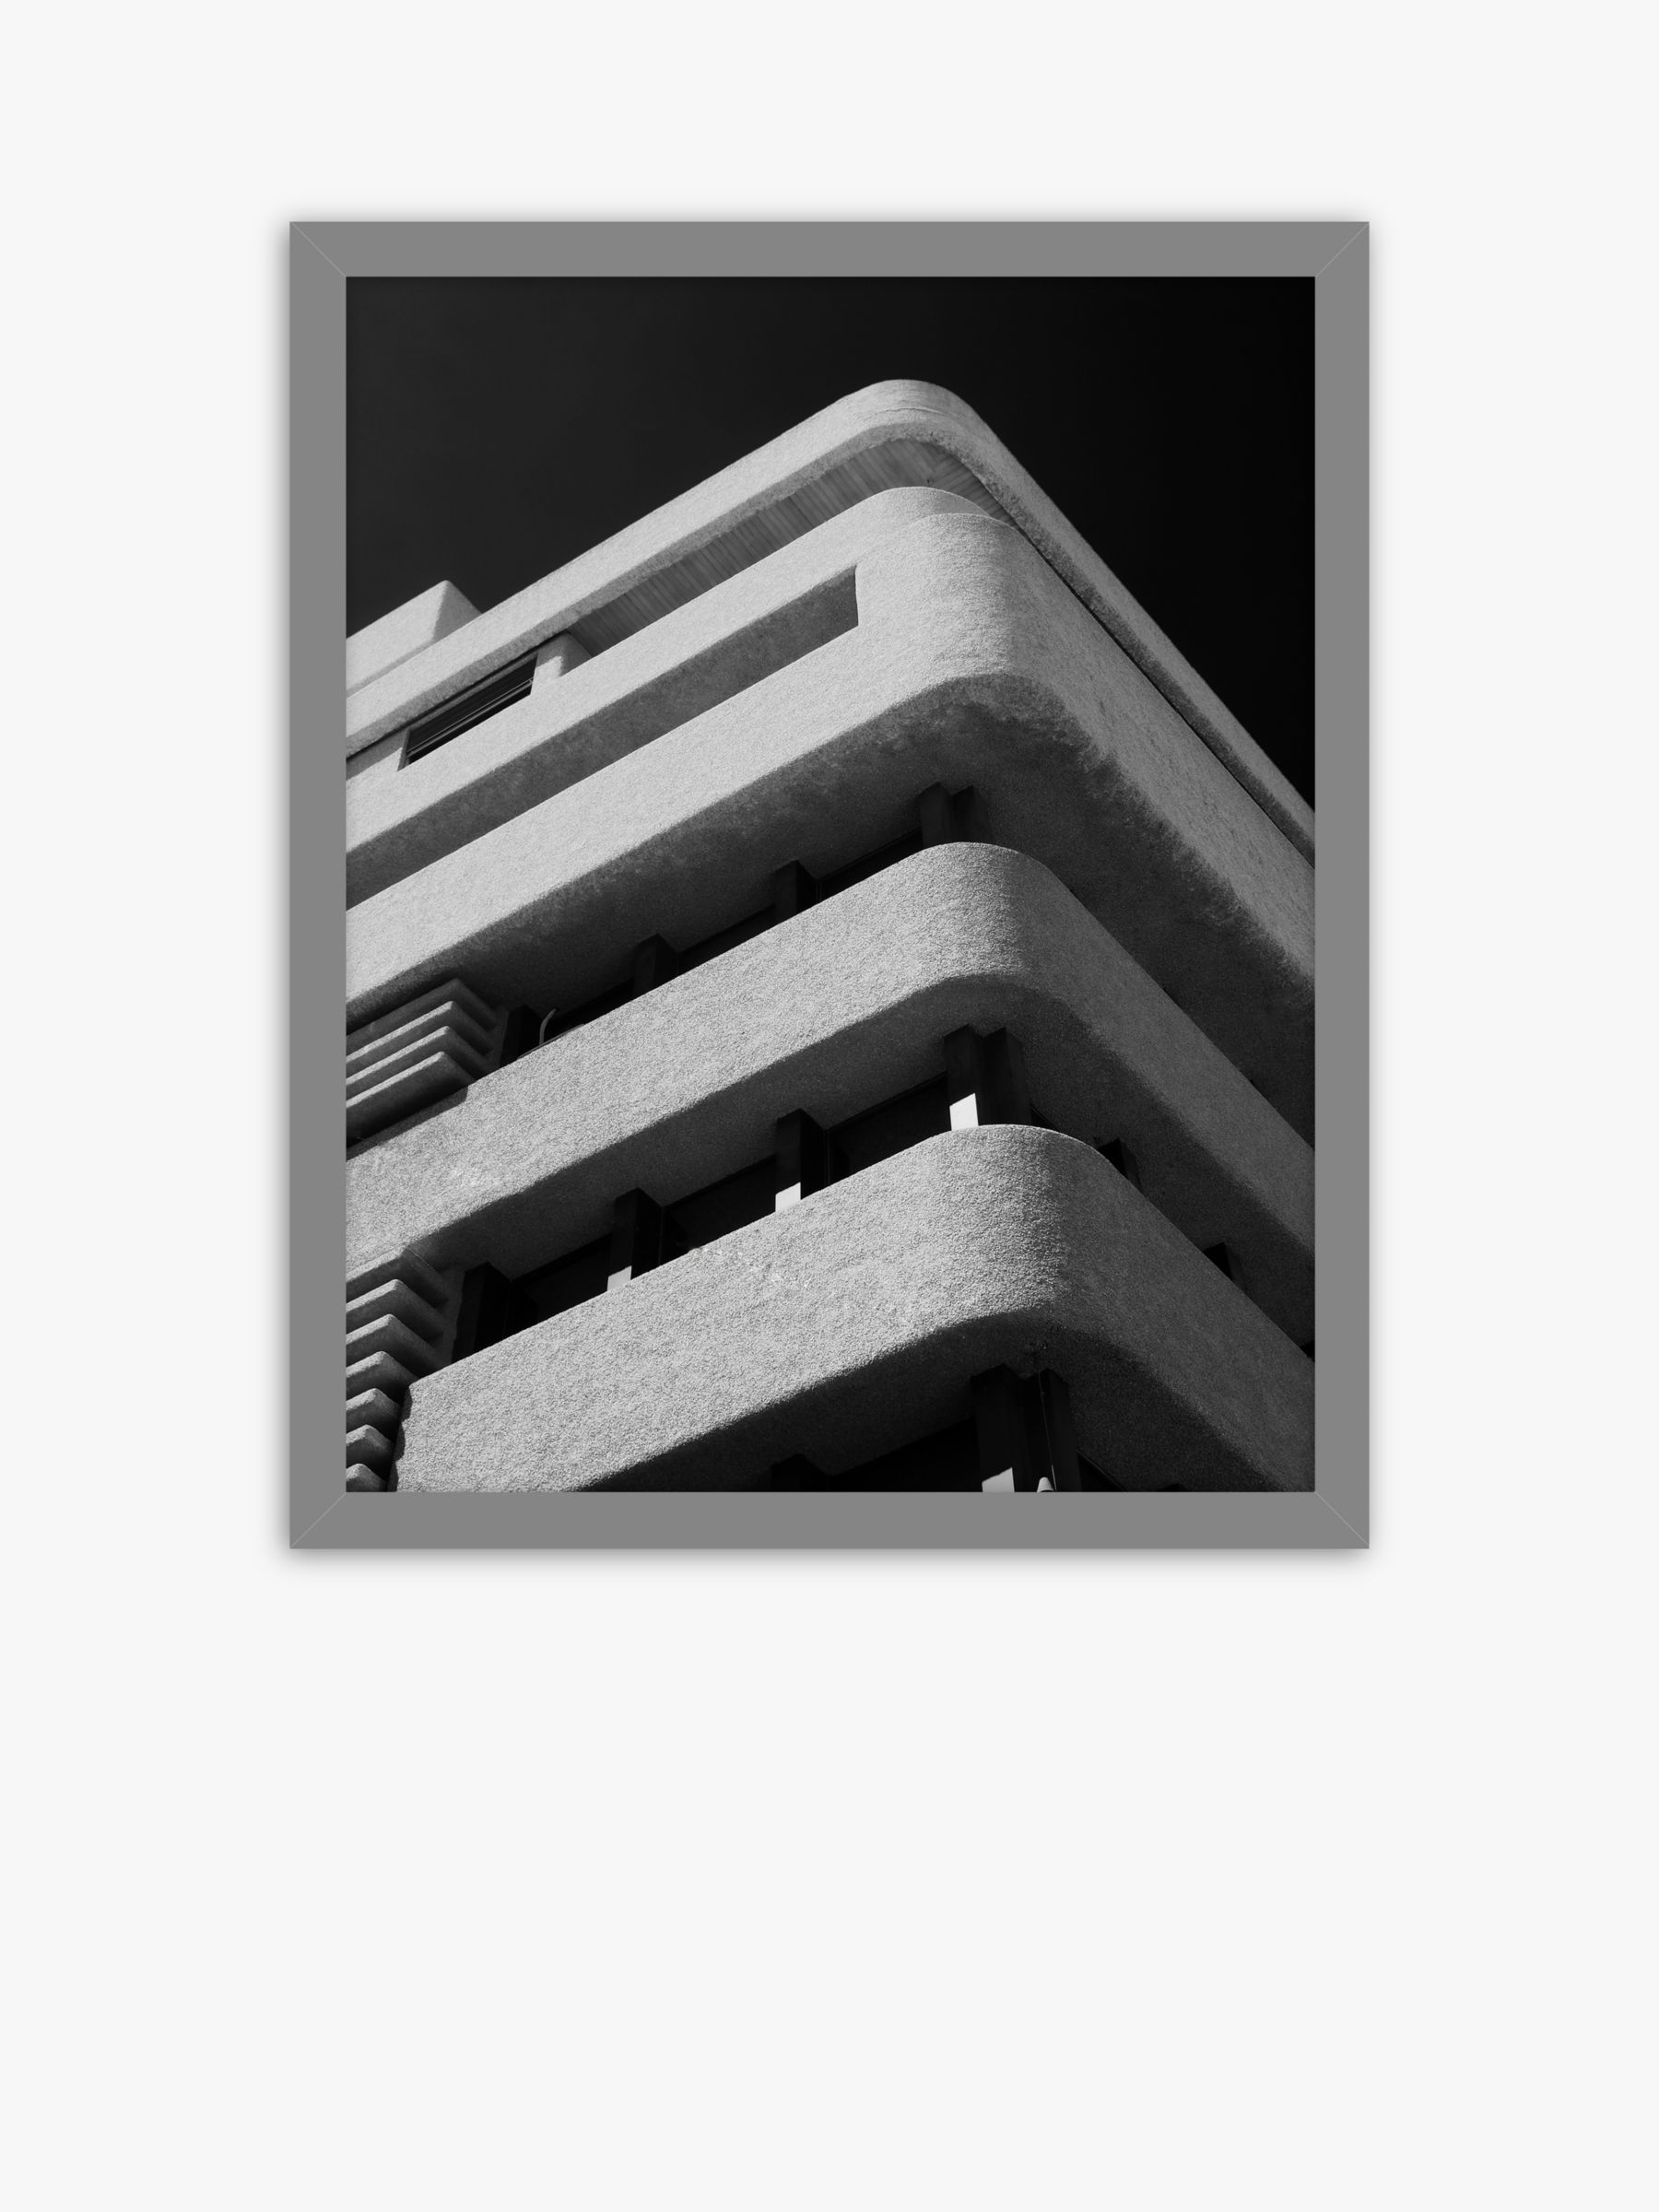 Photo of Phil openshaw - concrete corners framed photographic print 53.5 x 43.5cm black/white